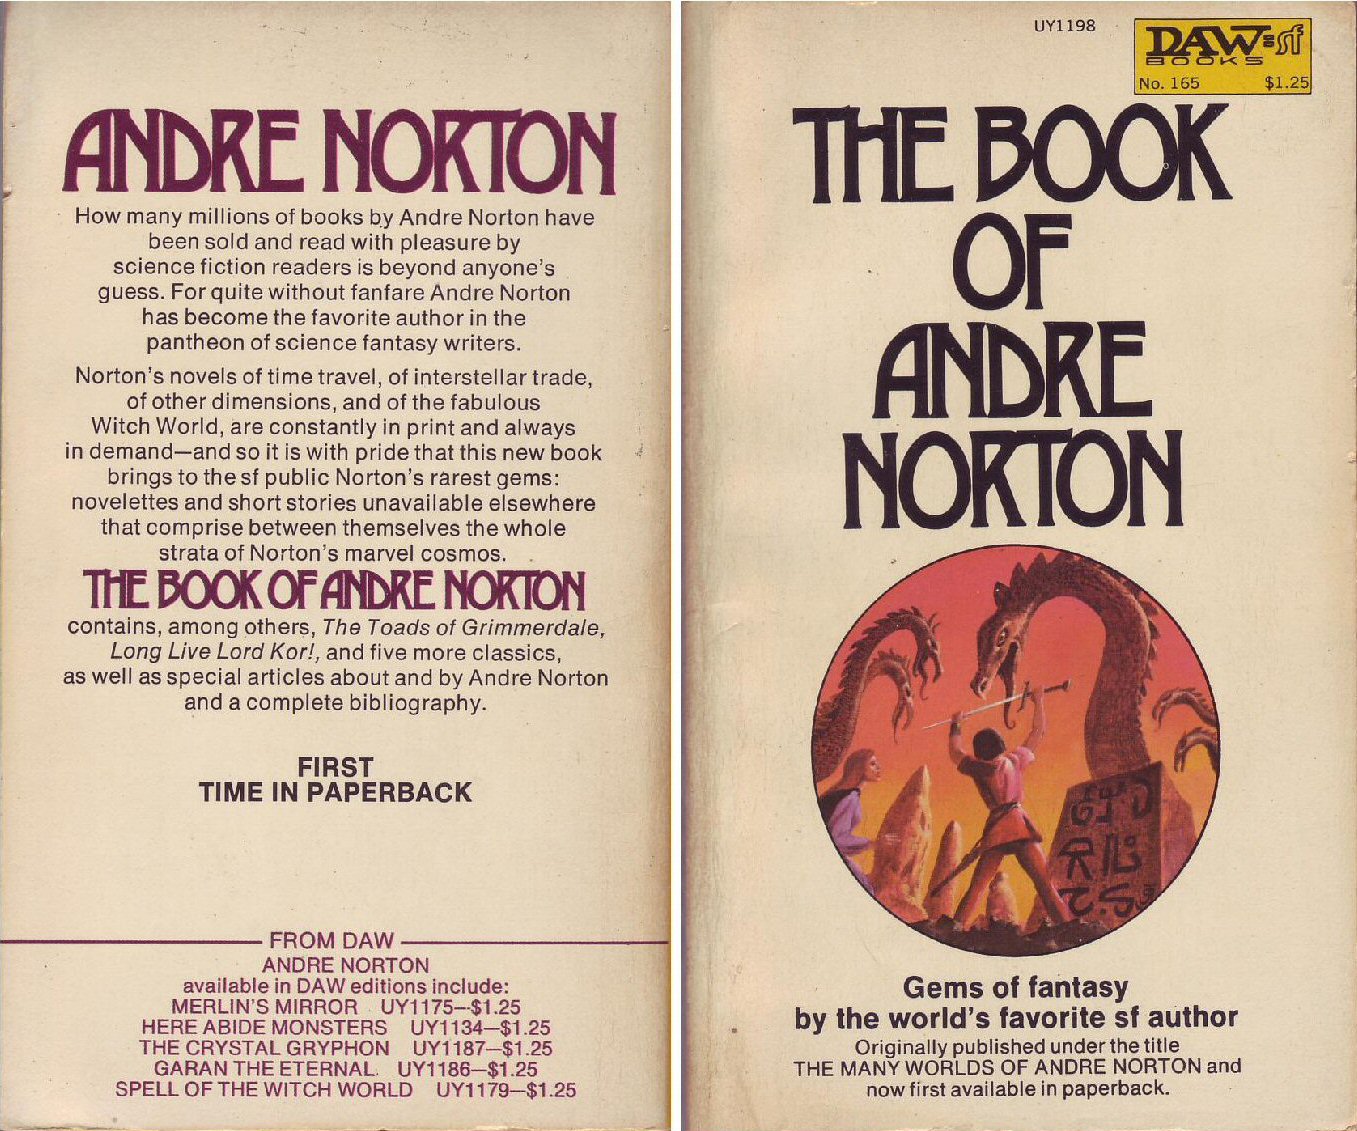 book of andre norton 1975 uy1198